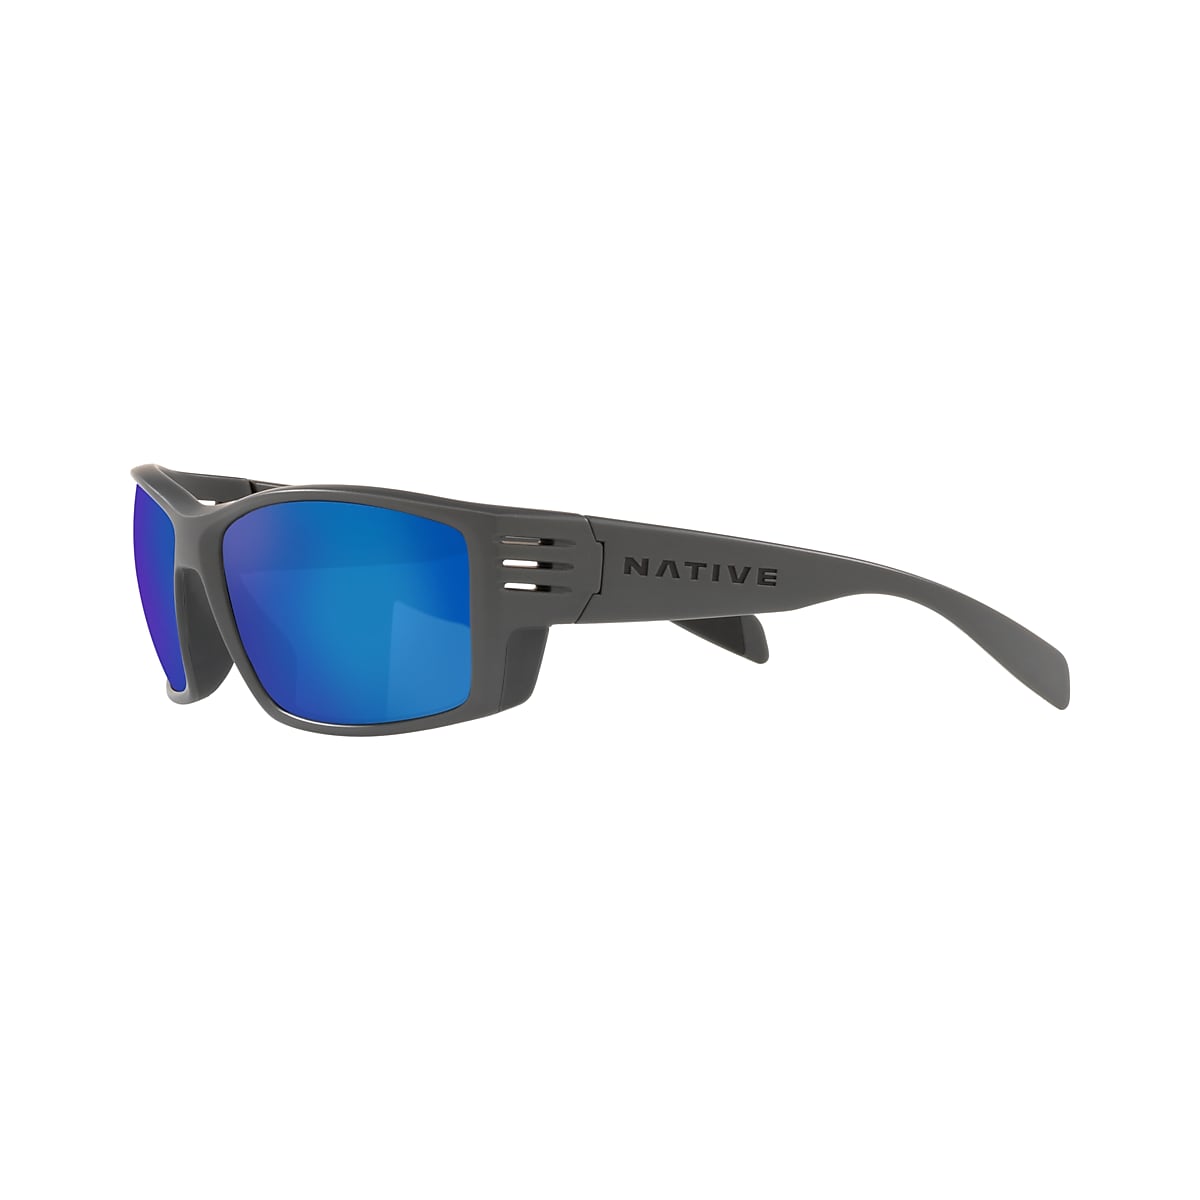 Raghorn Sunglasses in Blue Eyewear® Reflex | Native